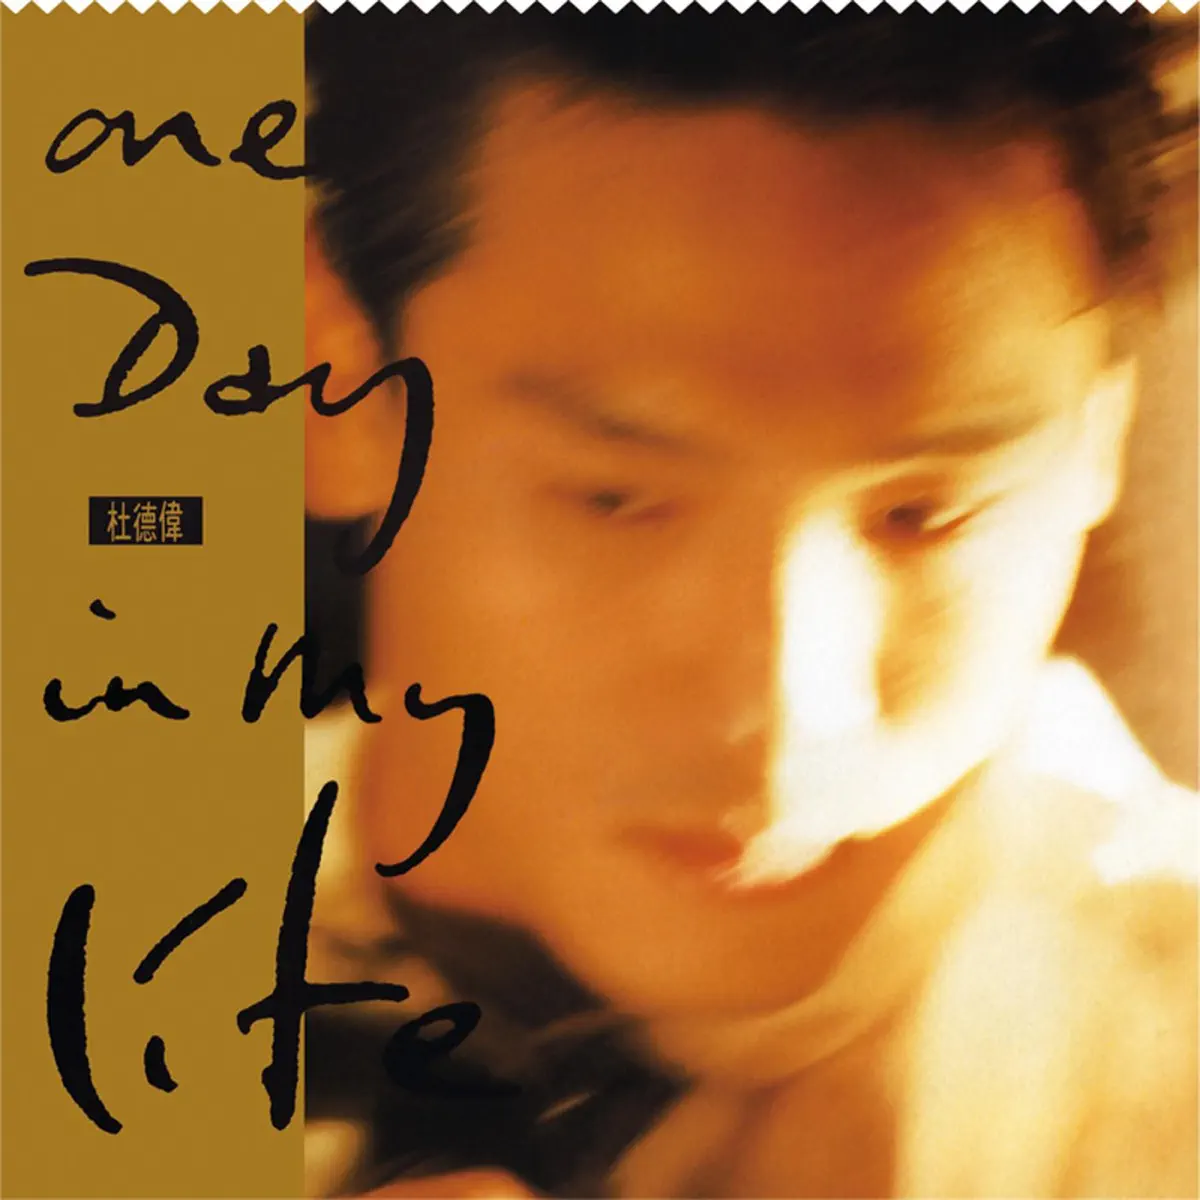 杜德伟 - One Day In My Life (1990) [iTunes Plus AAC M4A]-新房子